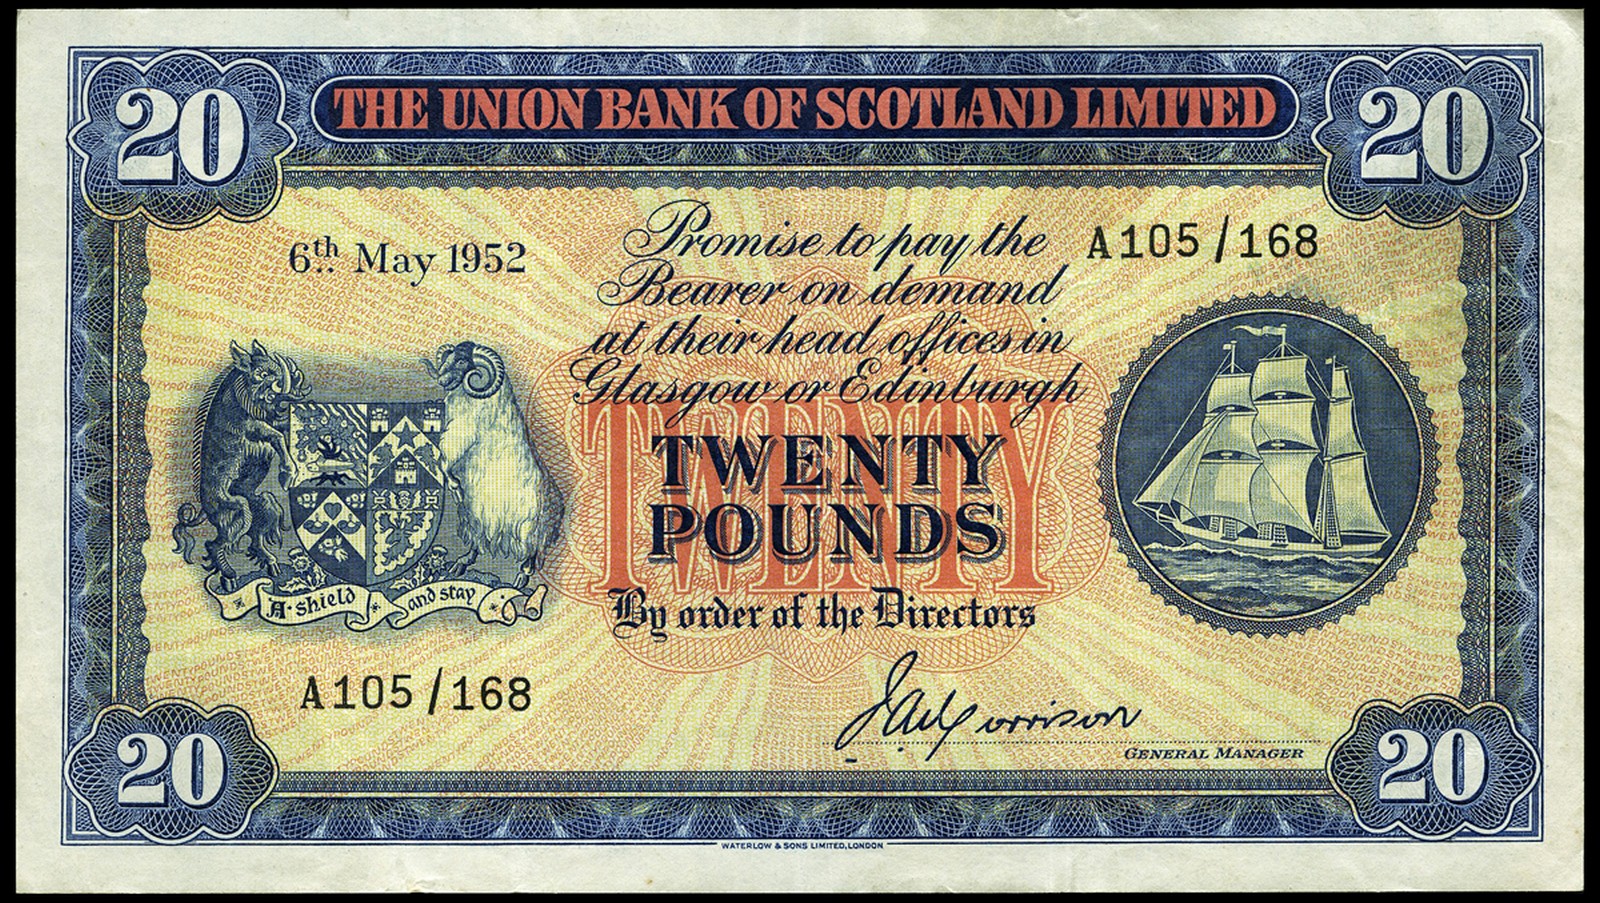 BRITISH BANKNOTES, The Union Bank of Scotland Ltd, Twenty Pounds, 6 May 1952, A 105/168, signature